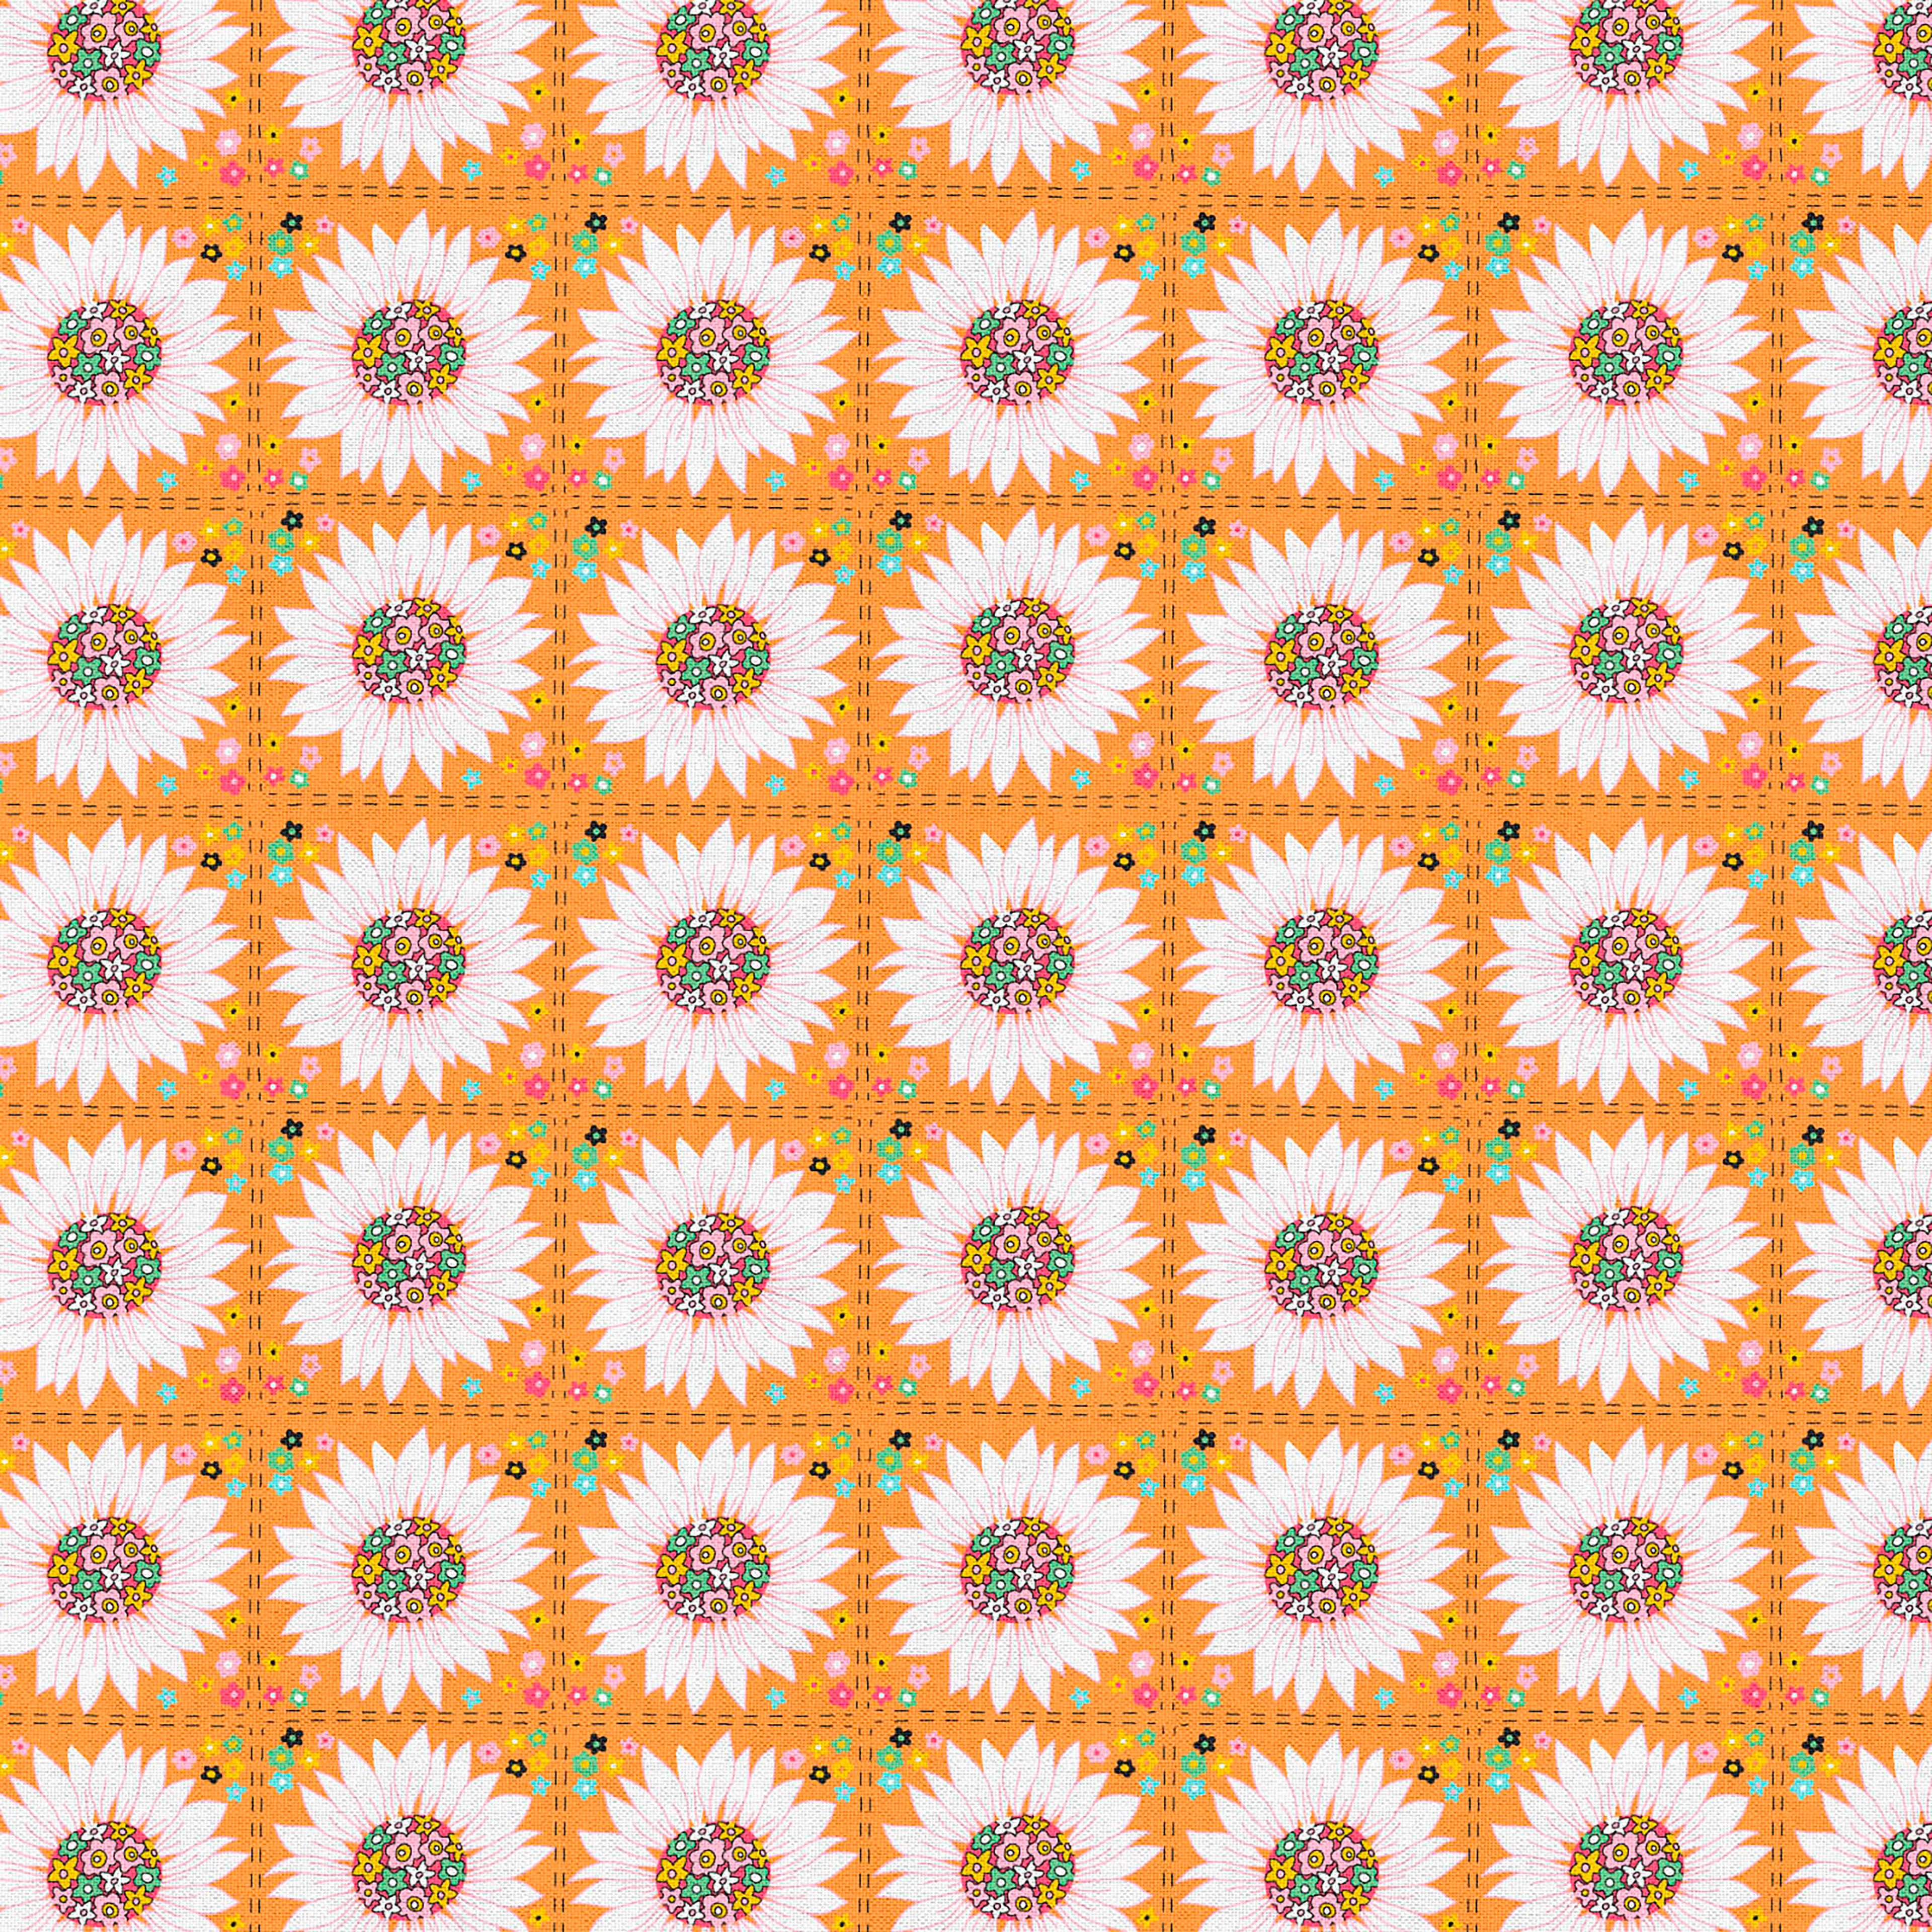 Fabric Editions Orange Retro Daisy Cotton Fabric